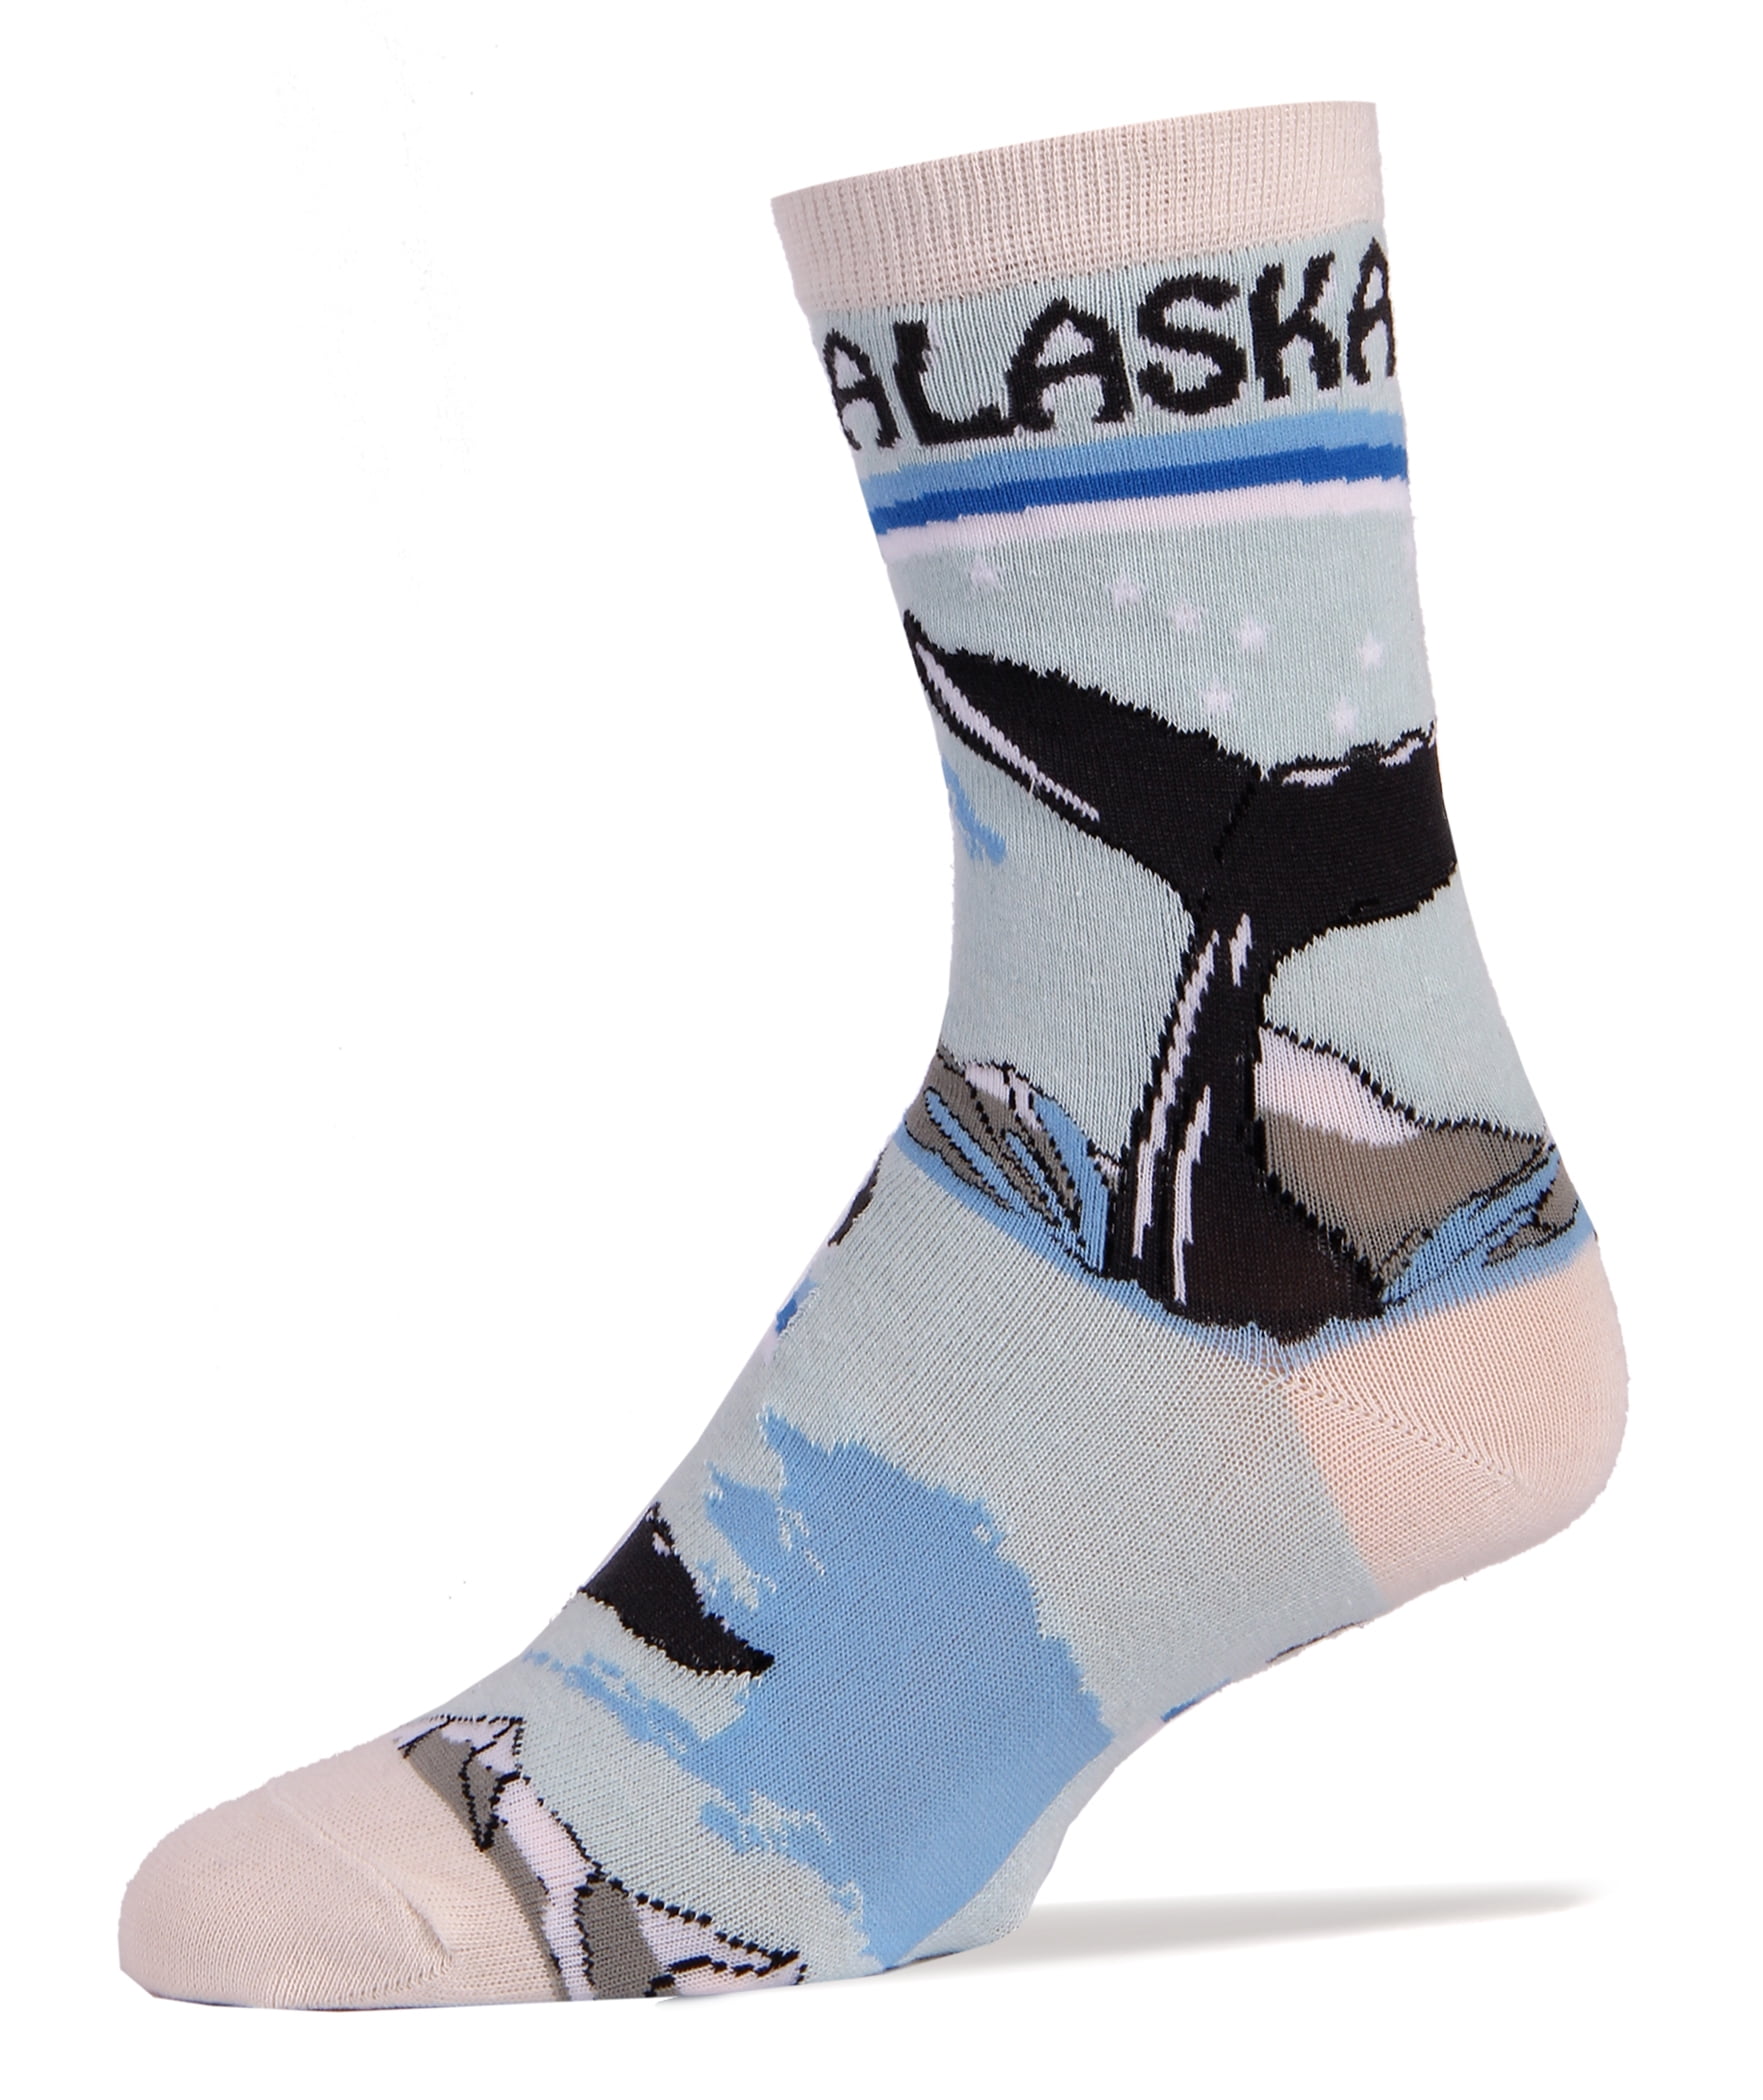 THE STATE MATE Alaska State Flag Mens Dress Socks Size 8-12